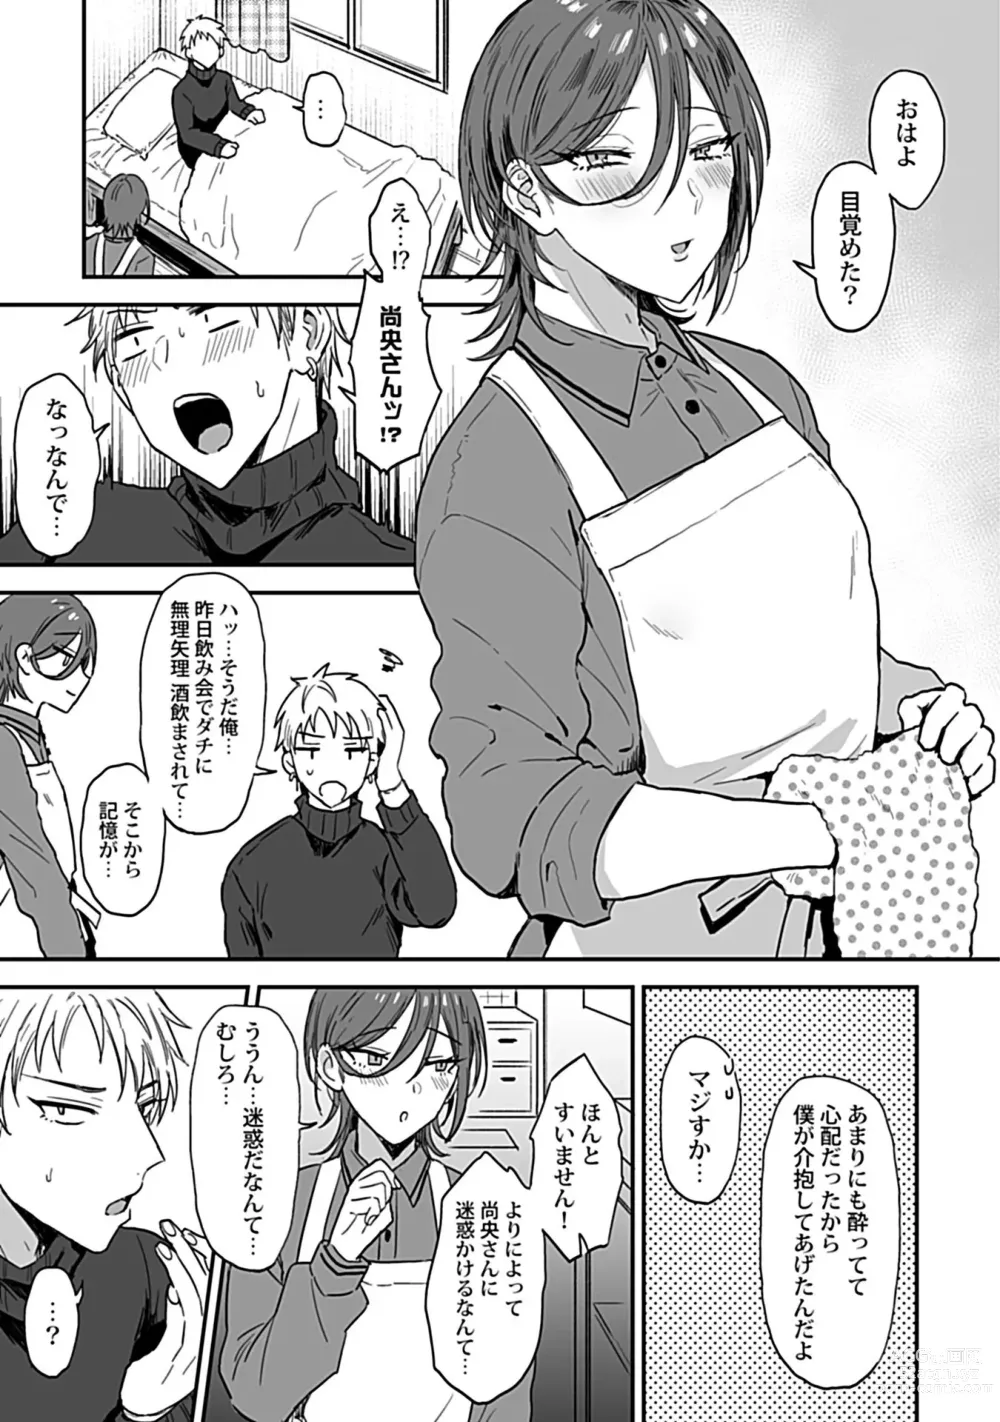 Page 7 of manga Tonari no Ecchi na Onii-san. 1 [R18 Ban] - The sexy boy who lives in the next!